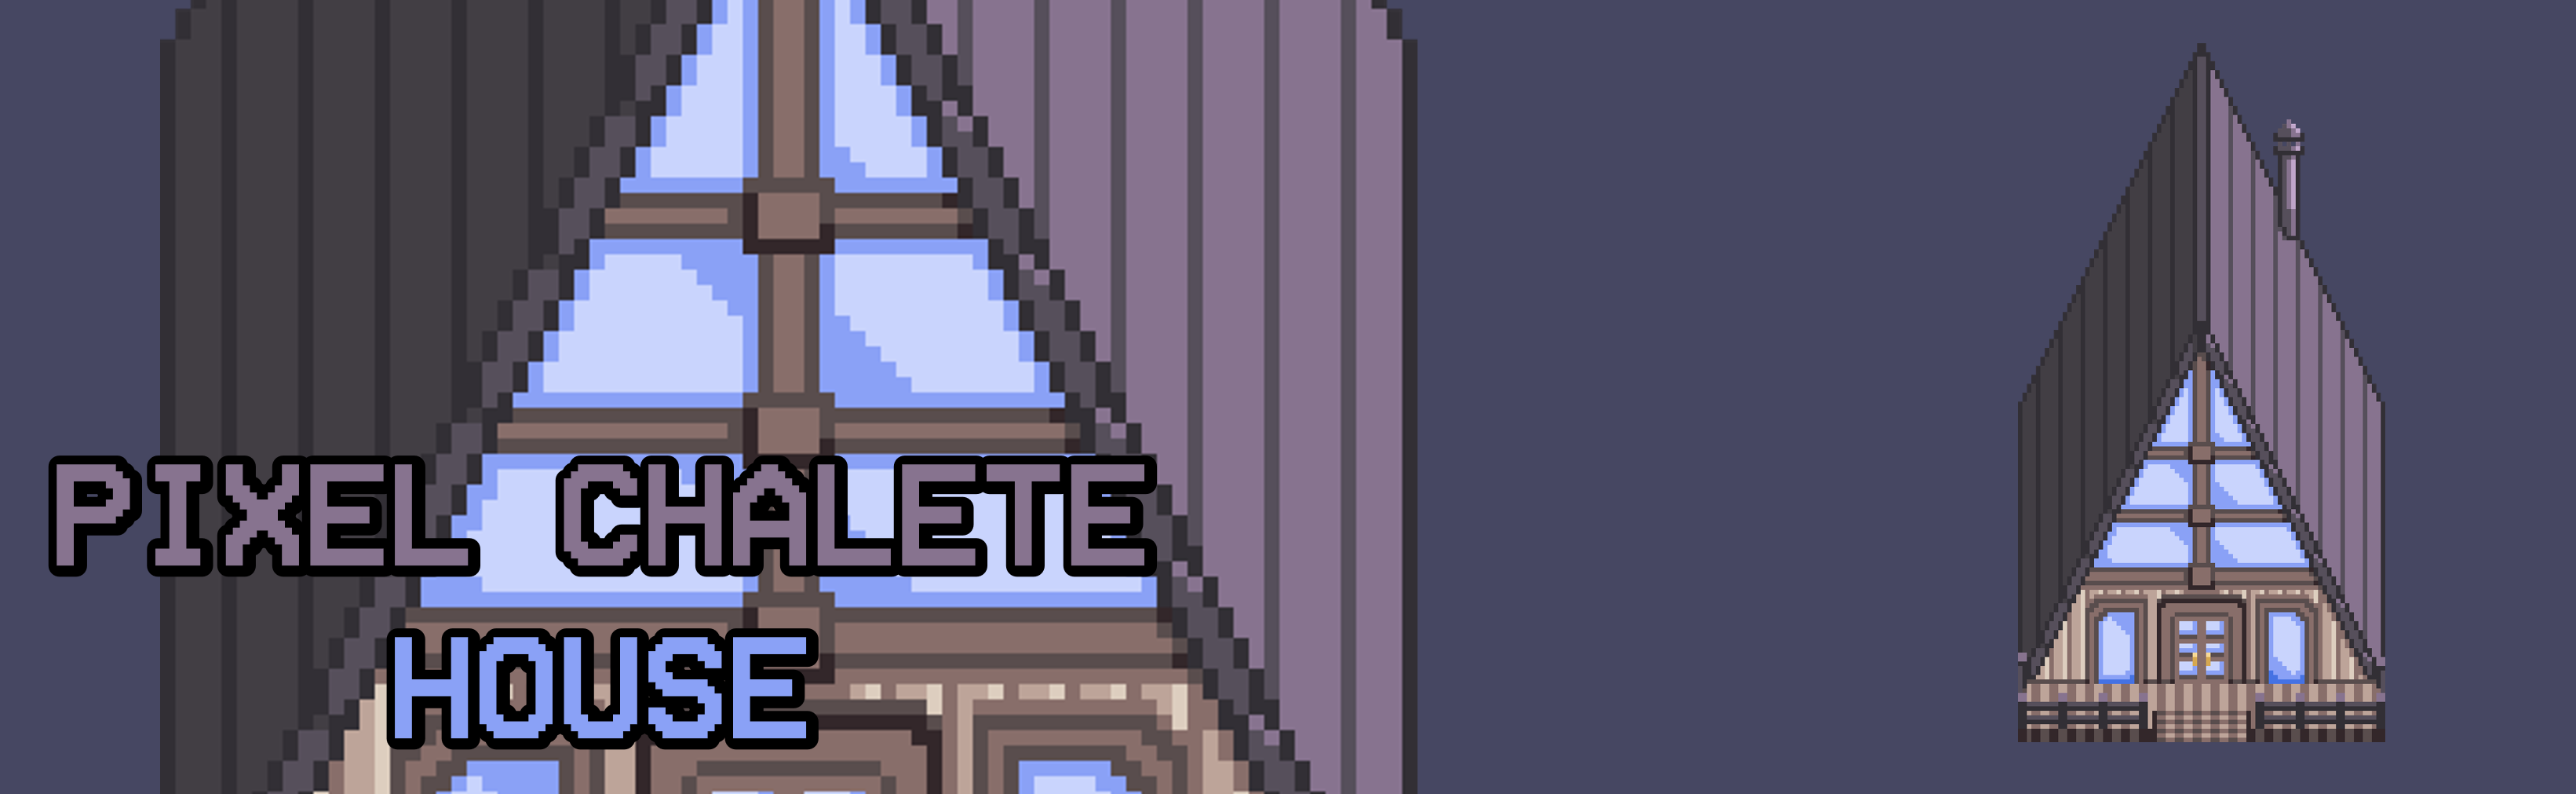 Pixel modern chalet house